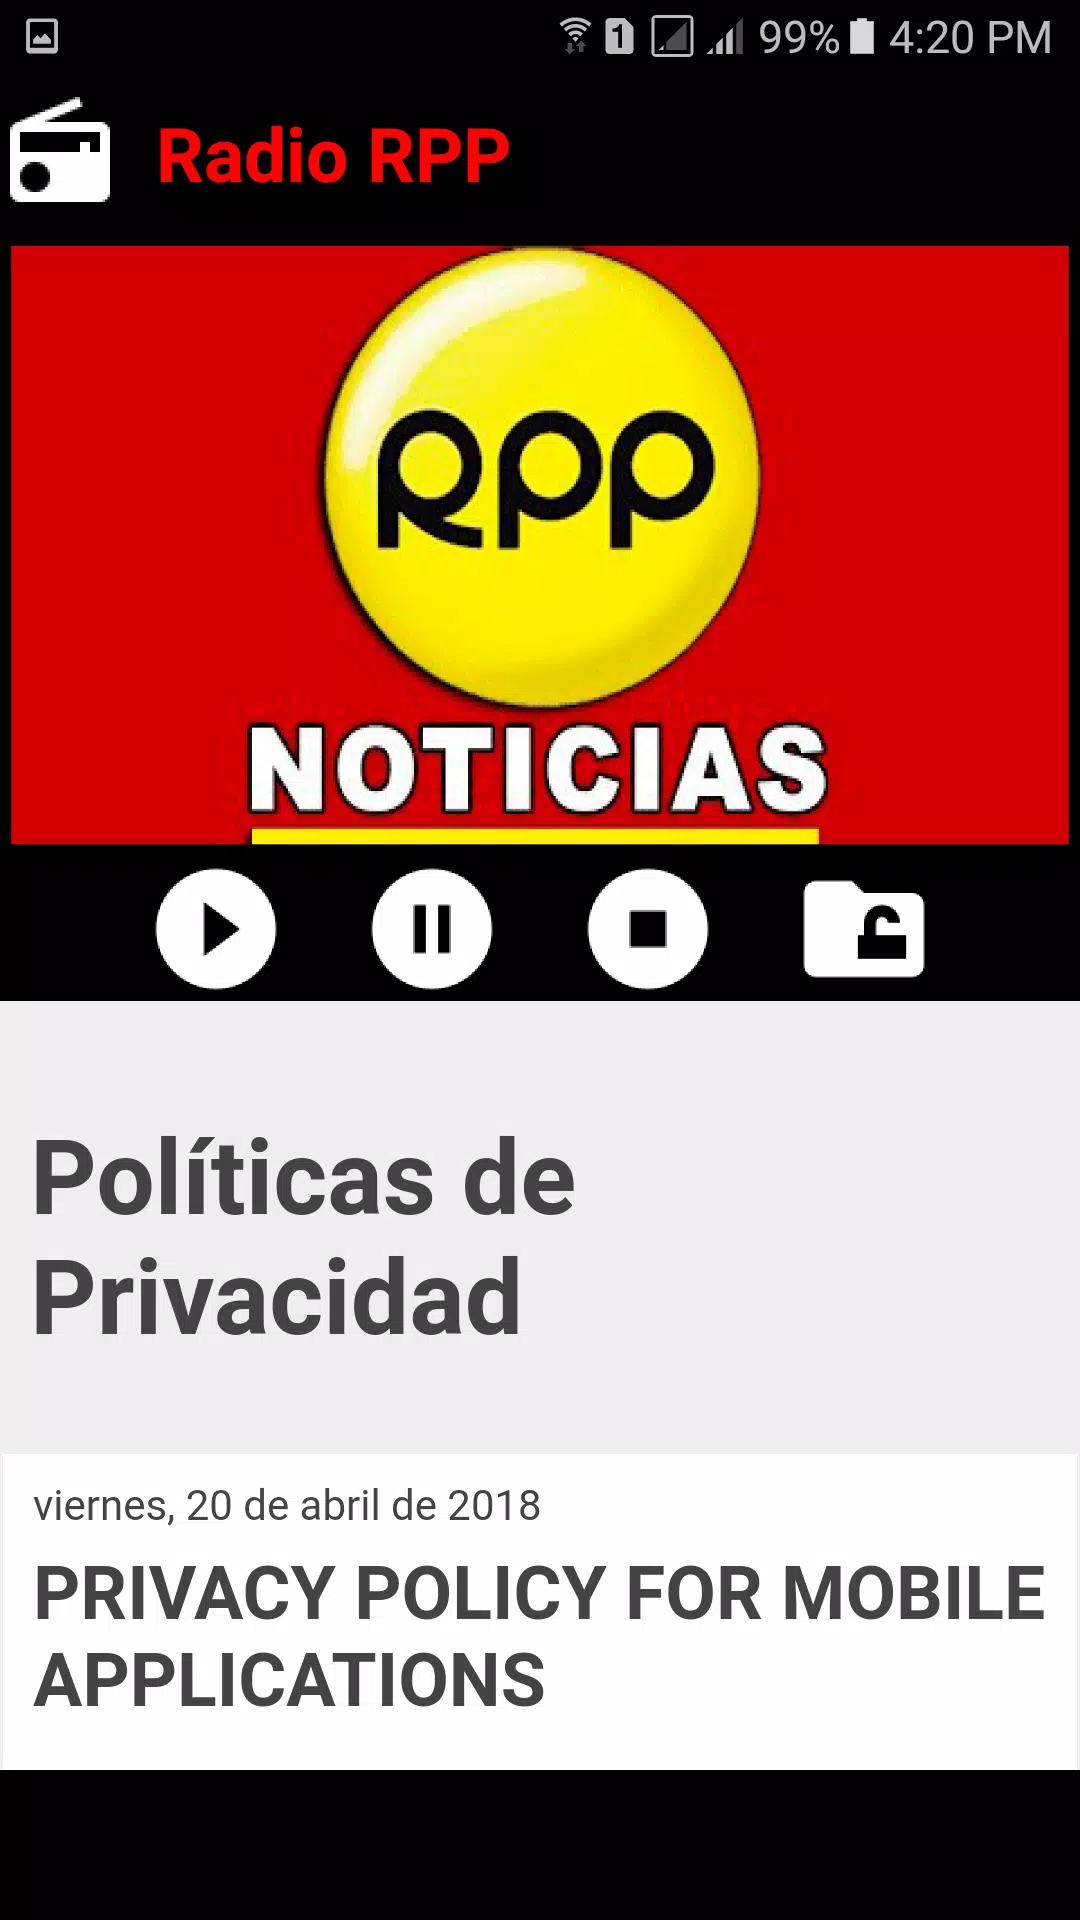 Radio Programas de Perú - radio rpp noticias APK للاندرويد تنزيل